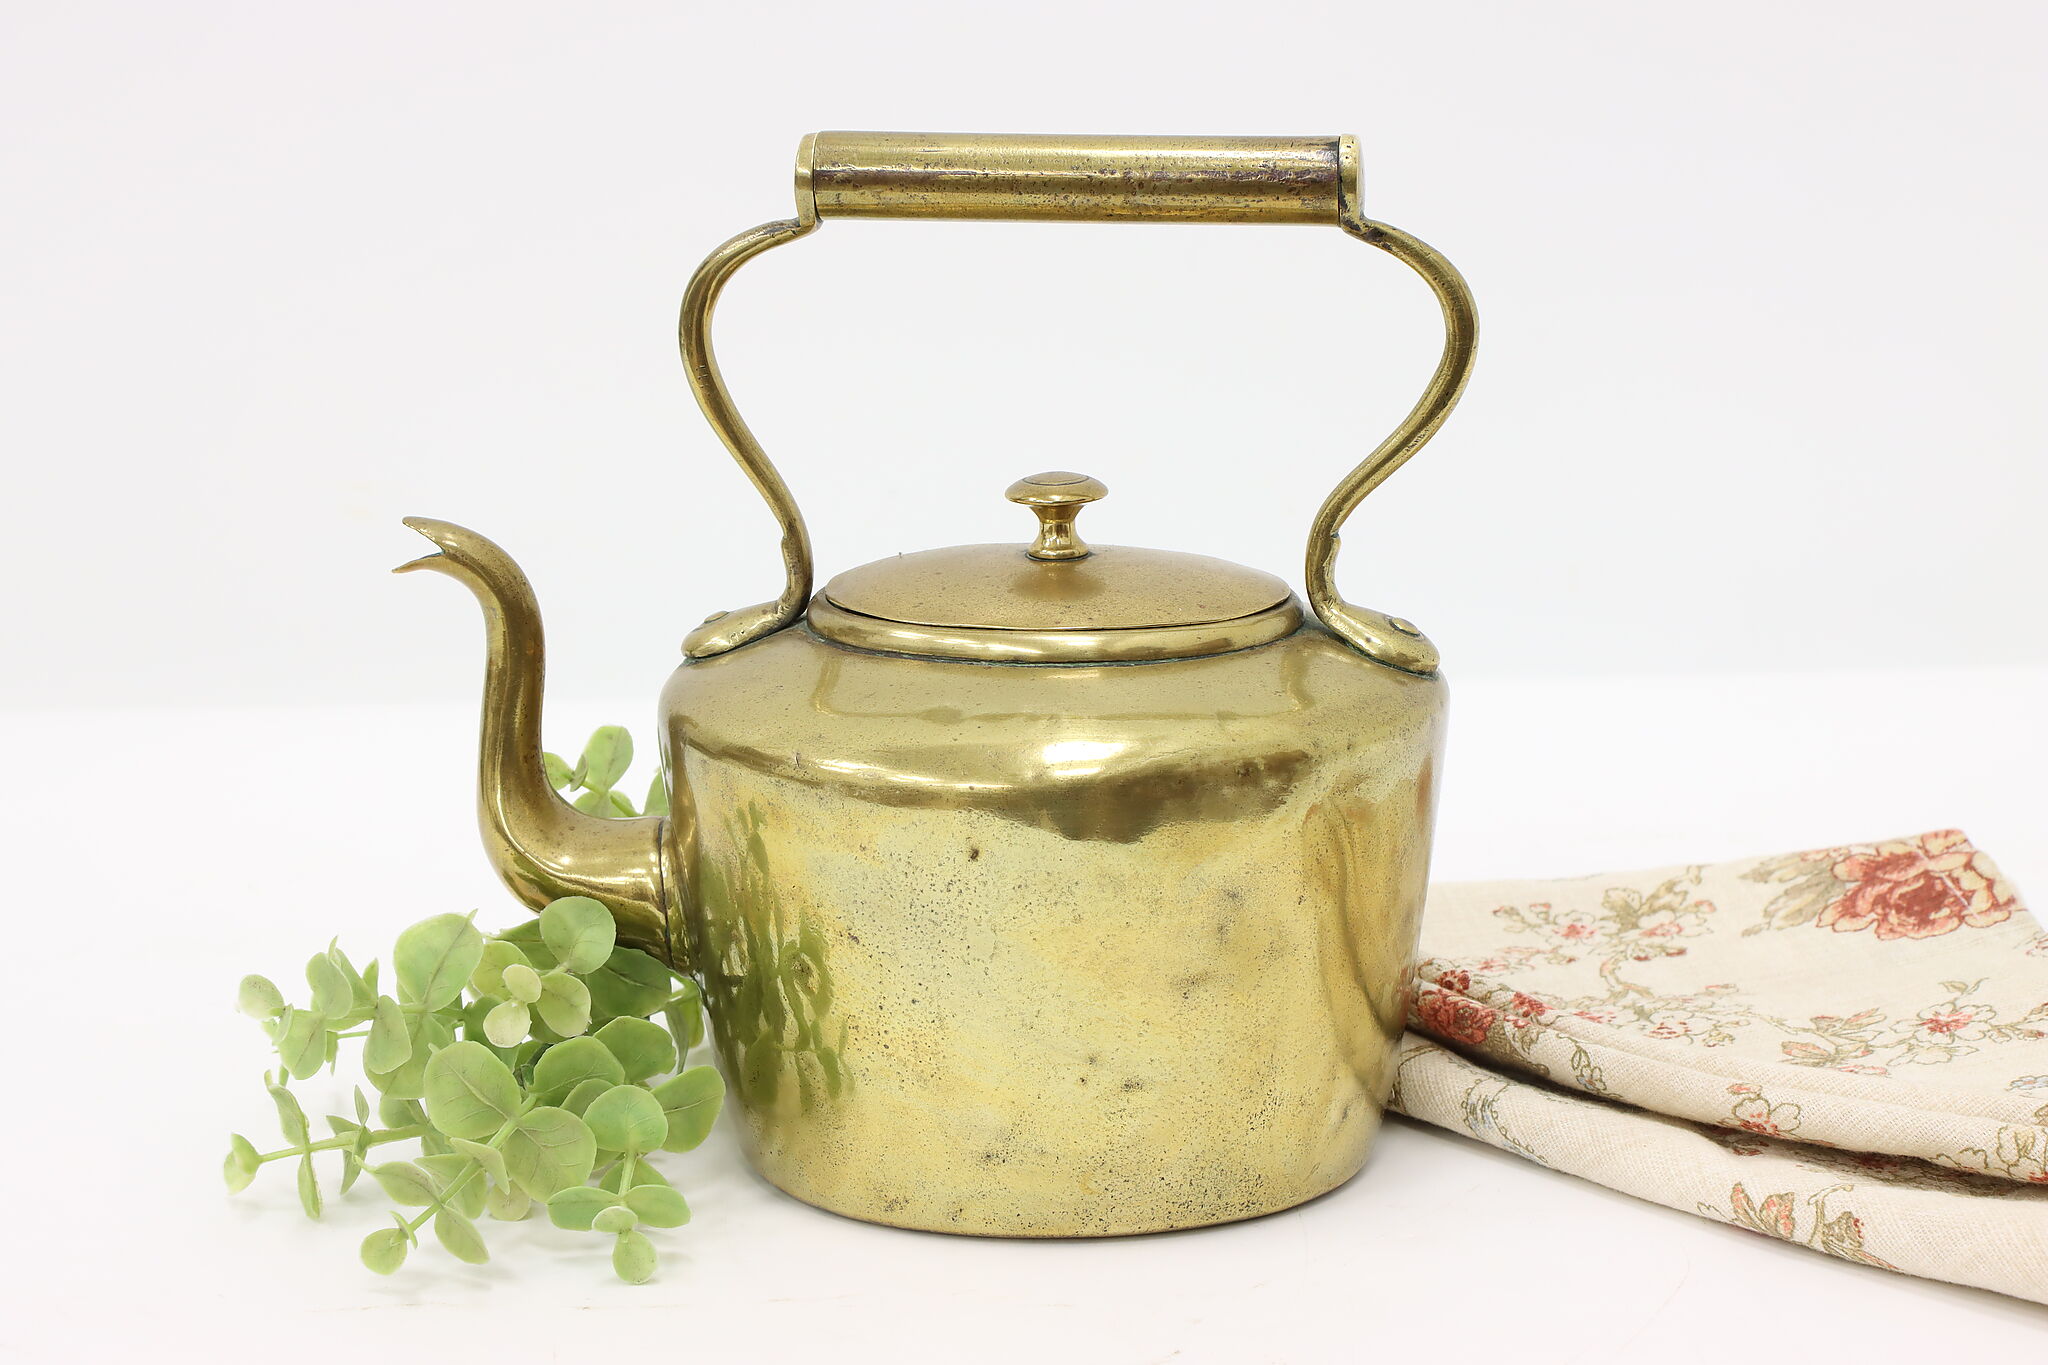 European Farmhouse Antique Brass Teapot or Kettle